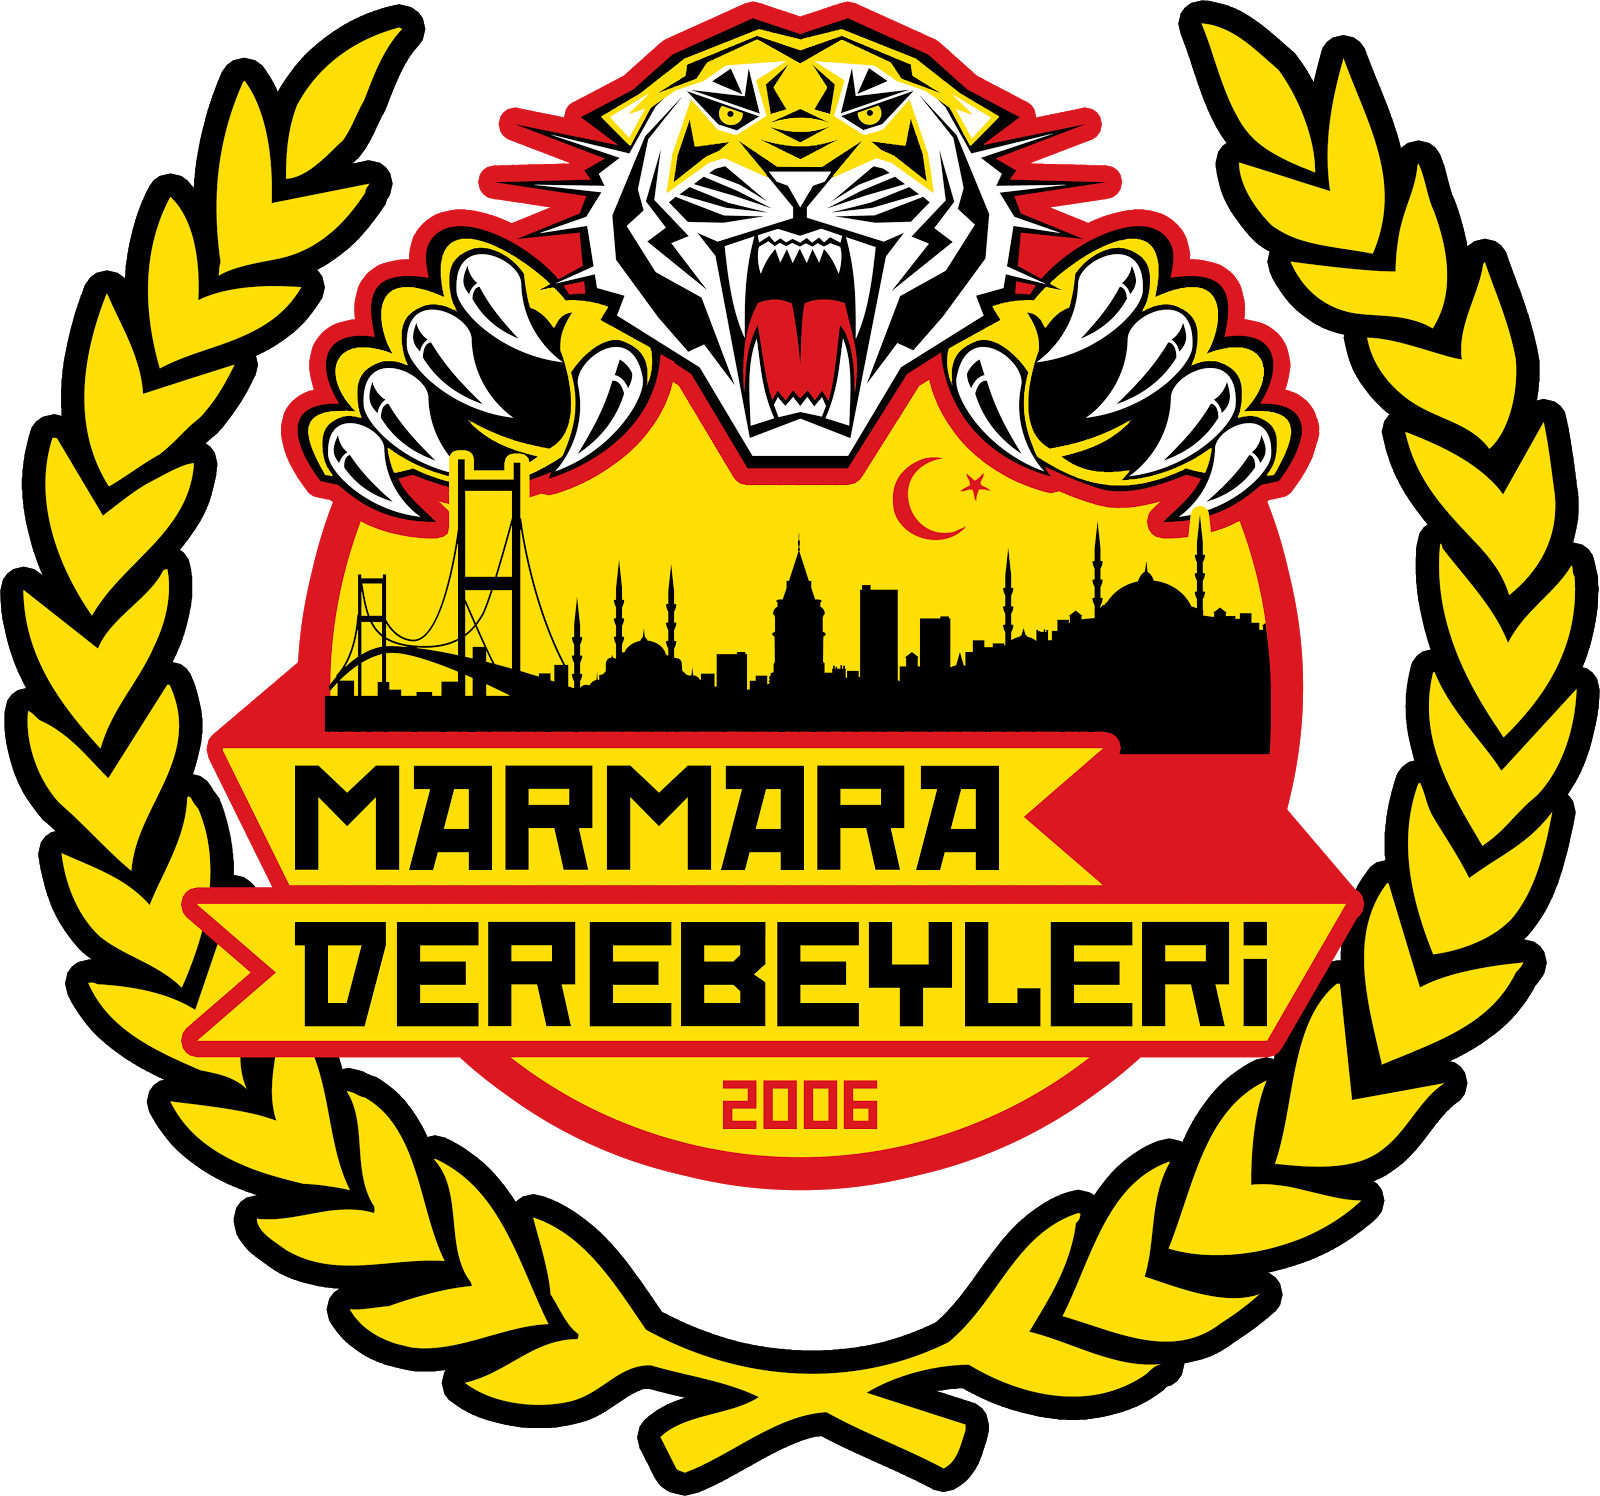 Marmara Derebeyleri